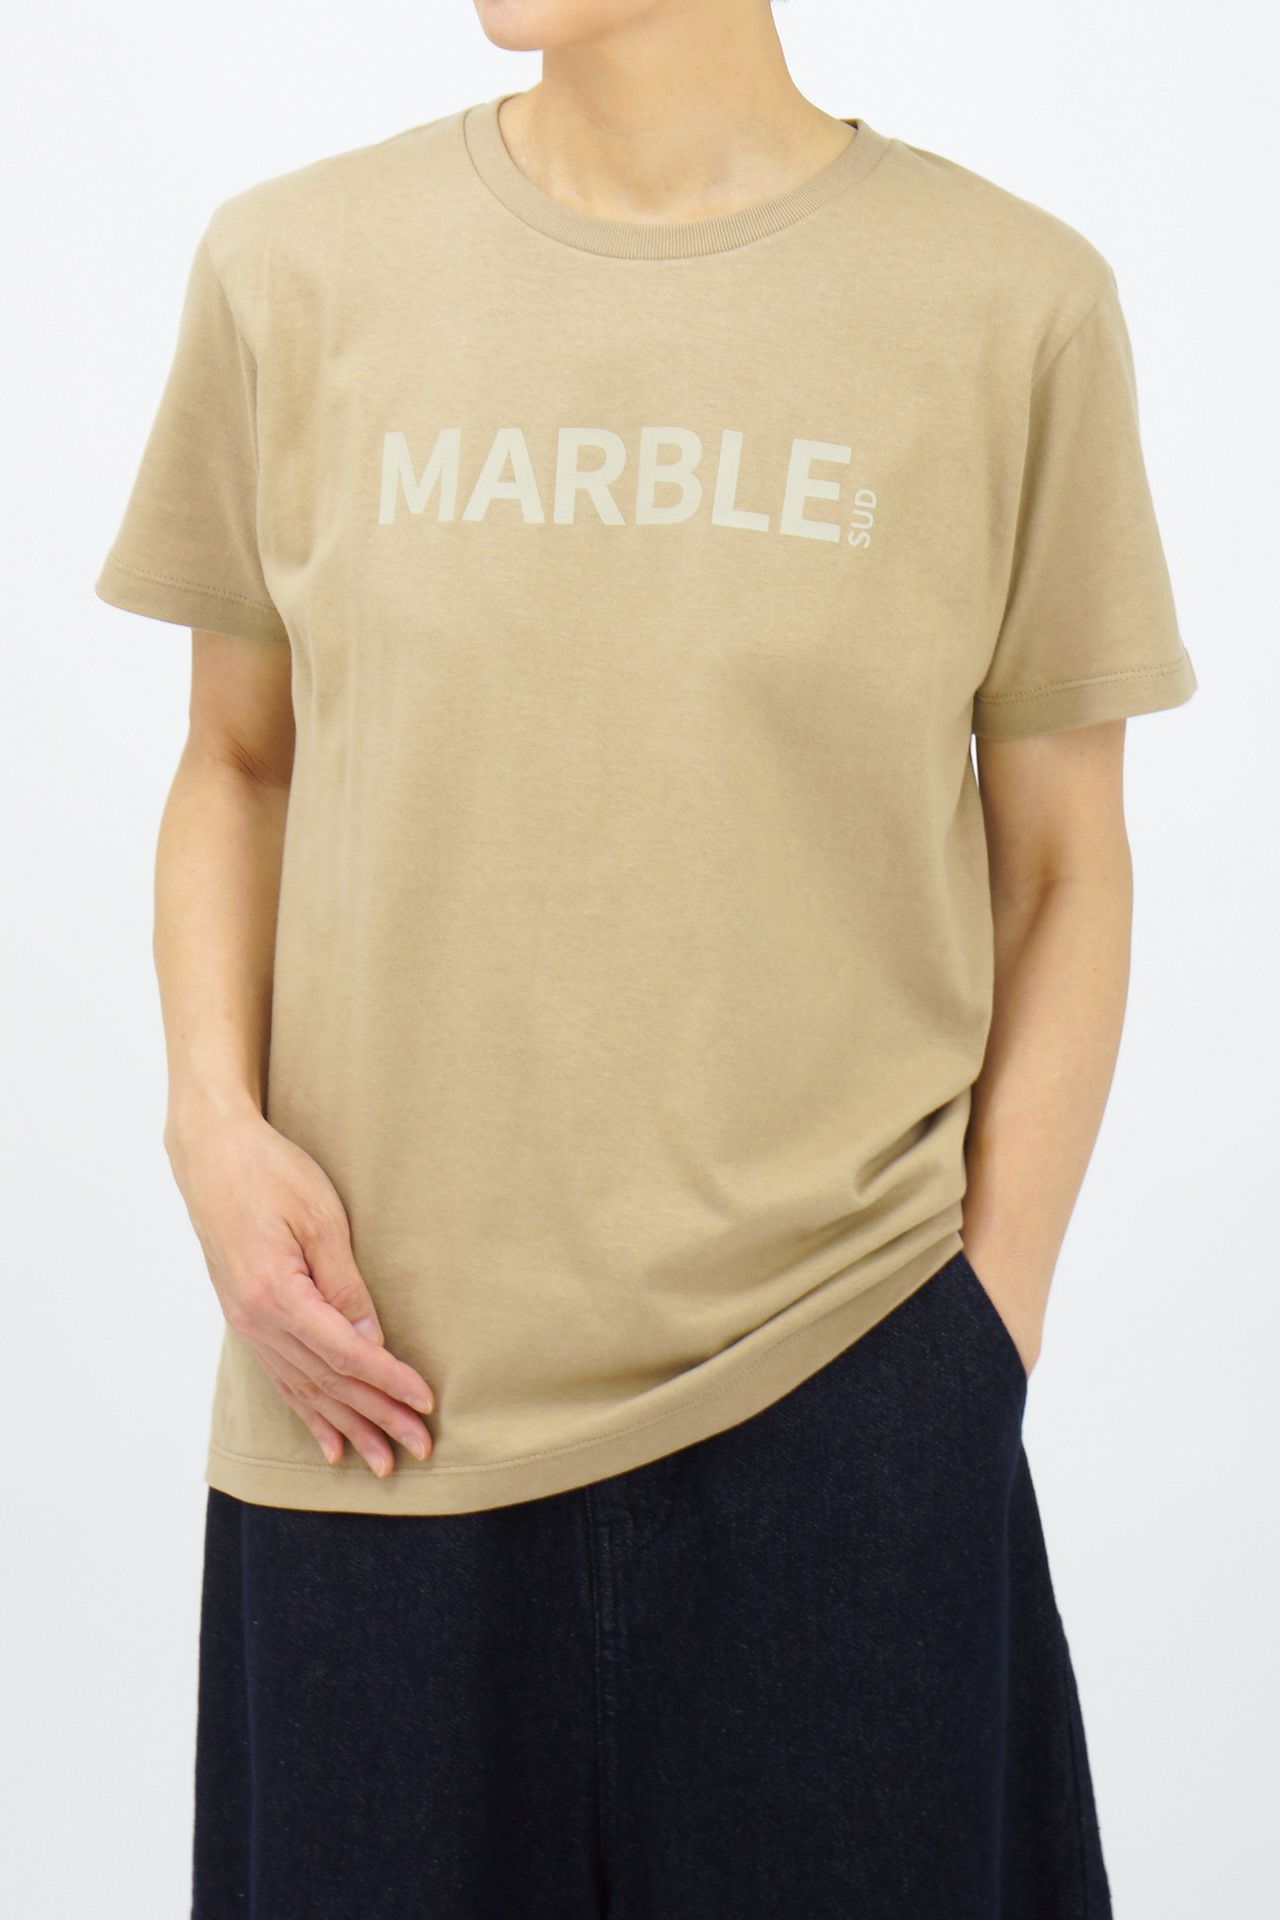 Marble フロッキー S/S TEE marble SUD(マーブルシュッド)公式通販